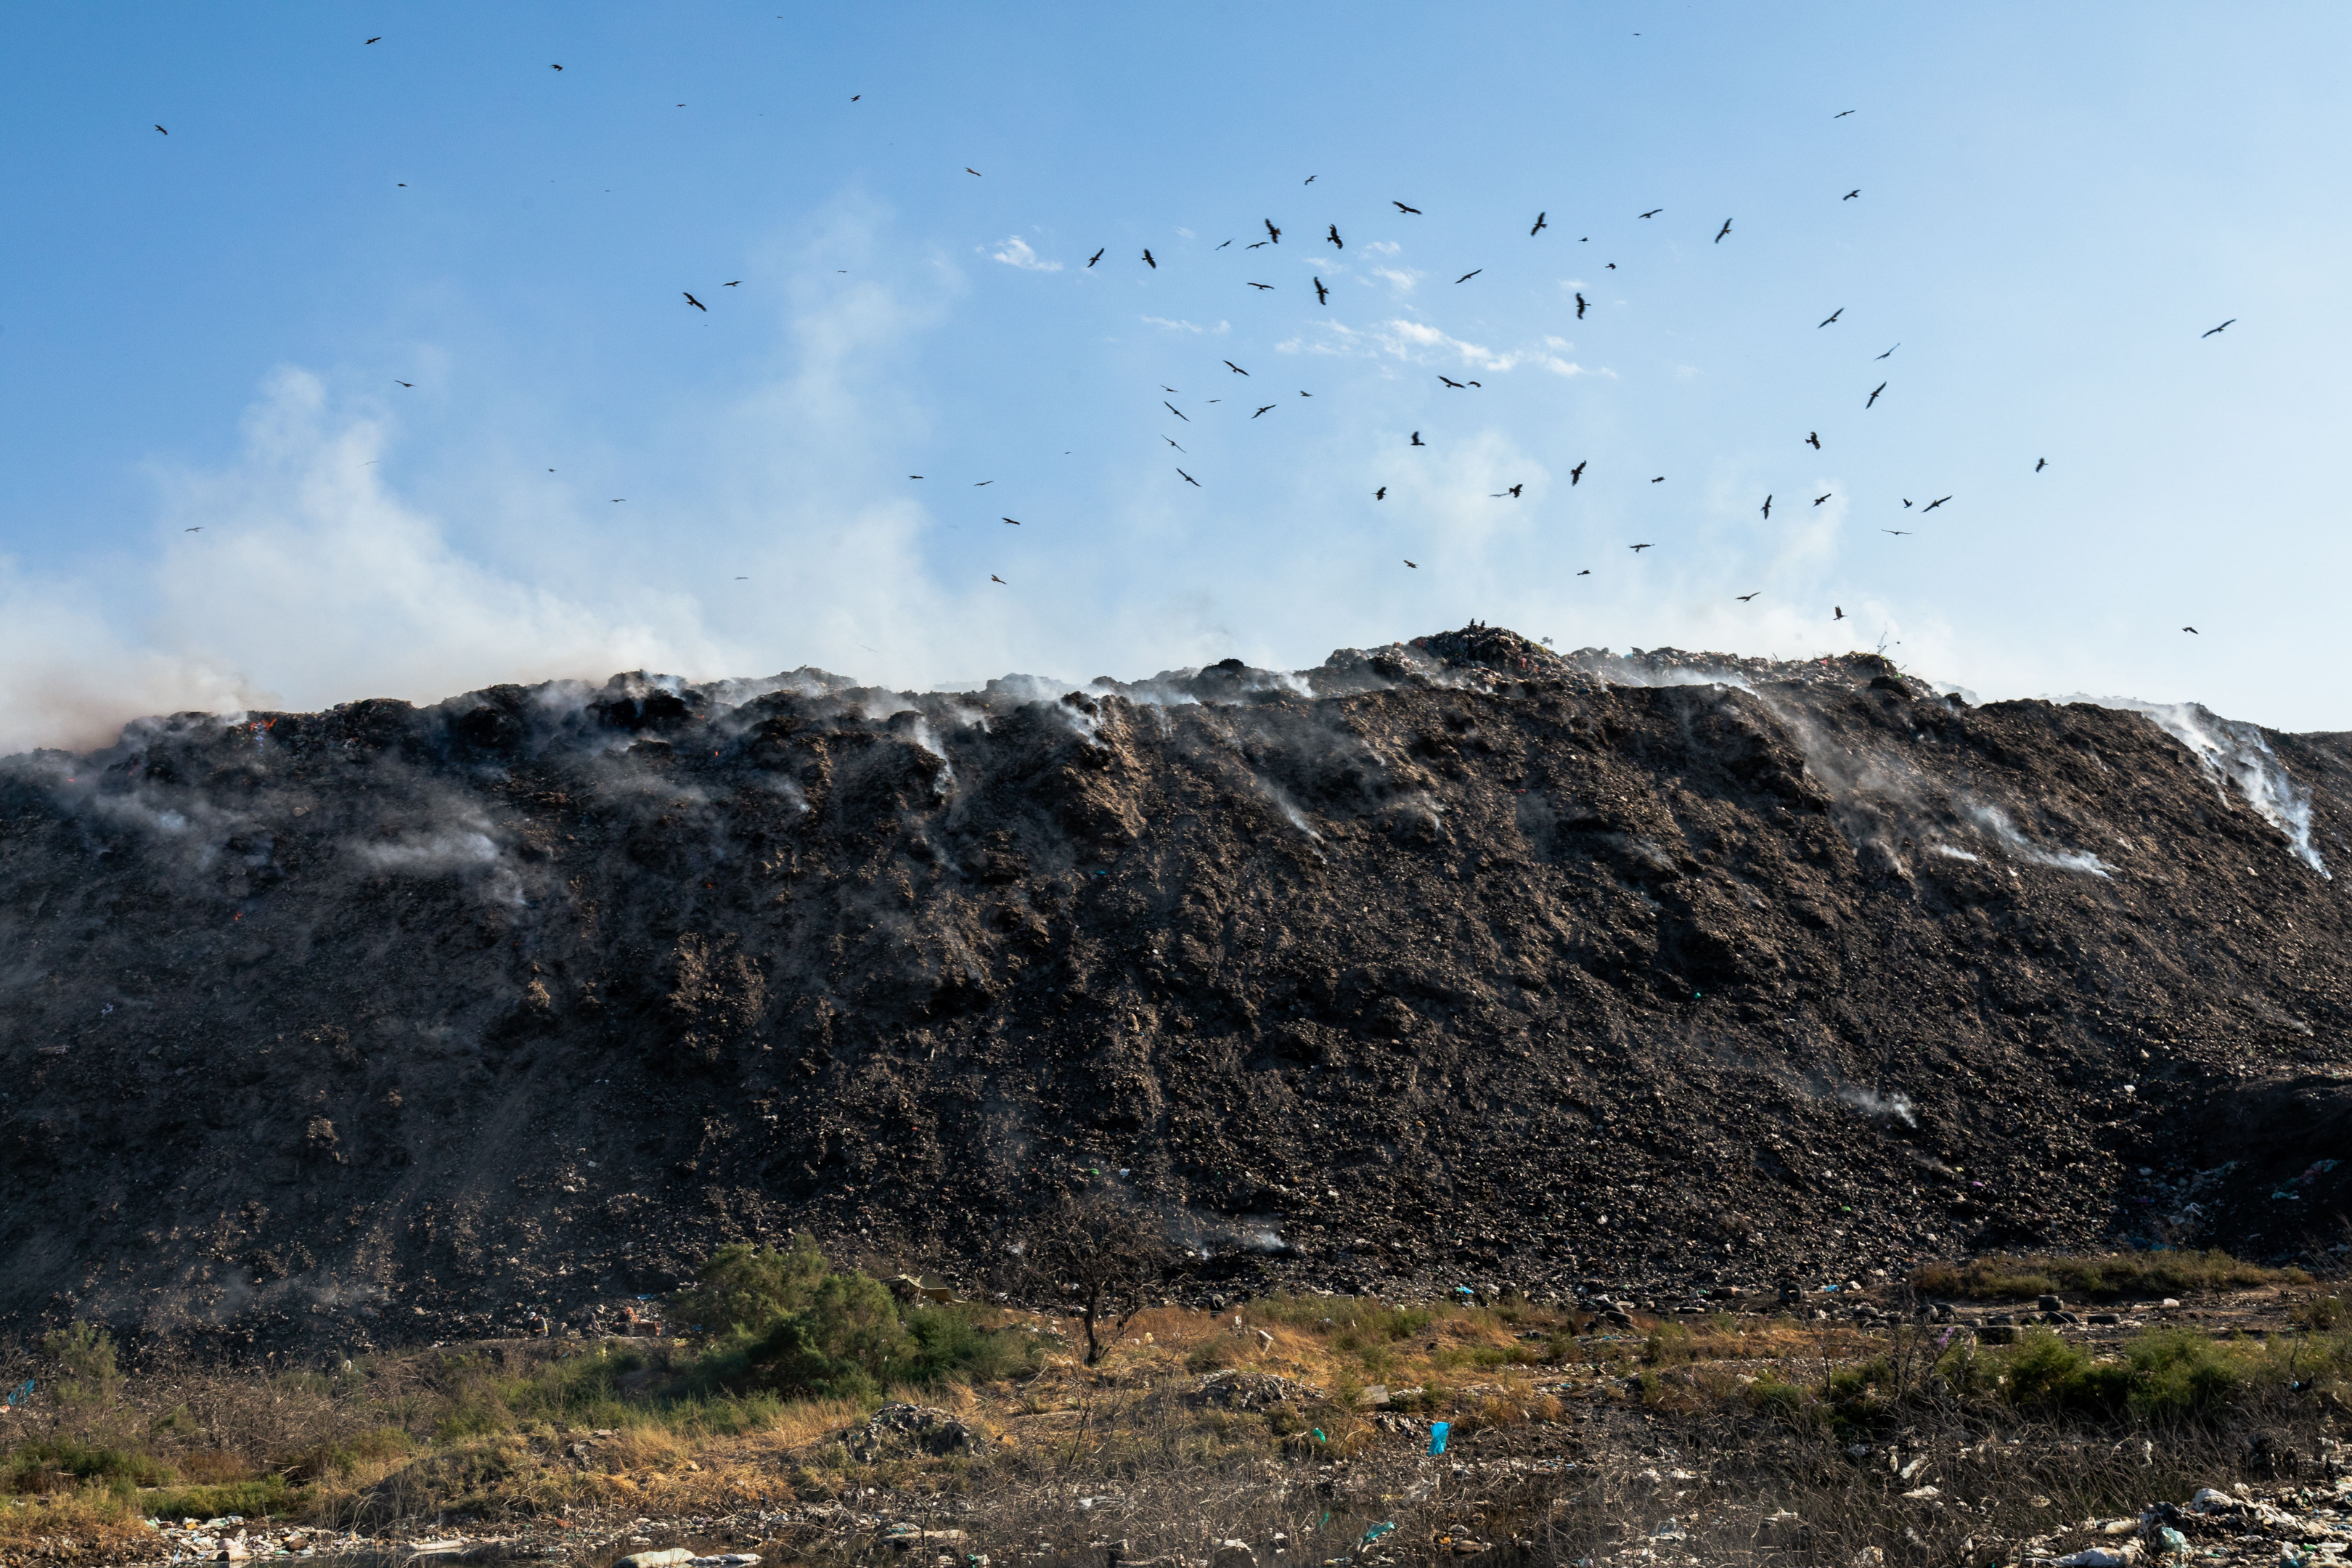 Methane generation from burning organic material in landfill